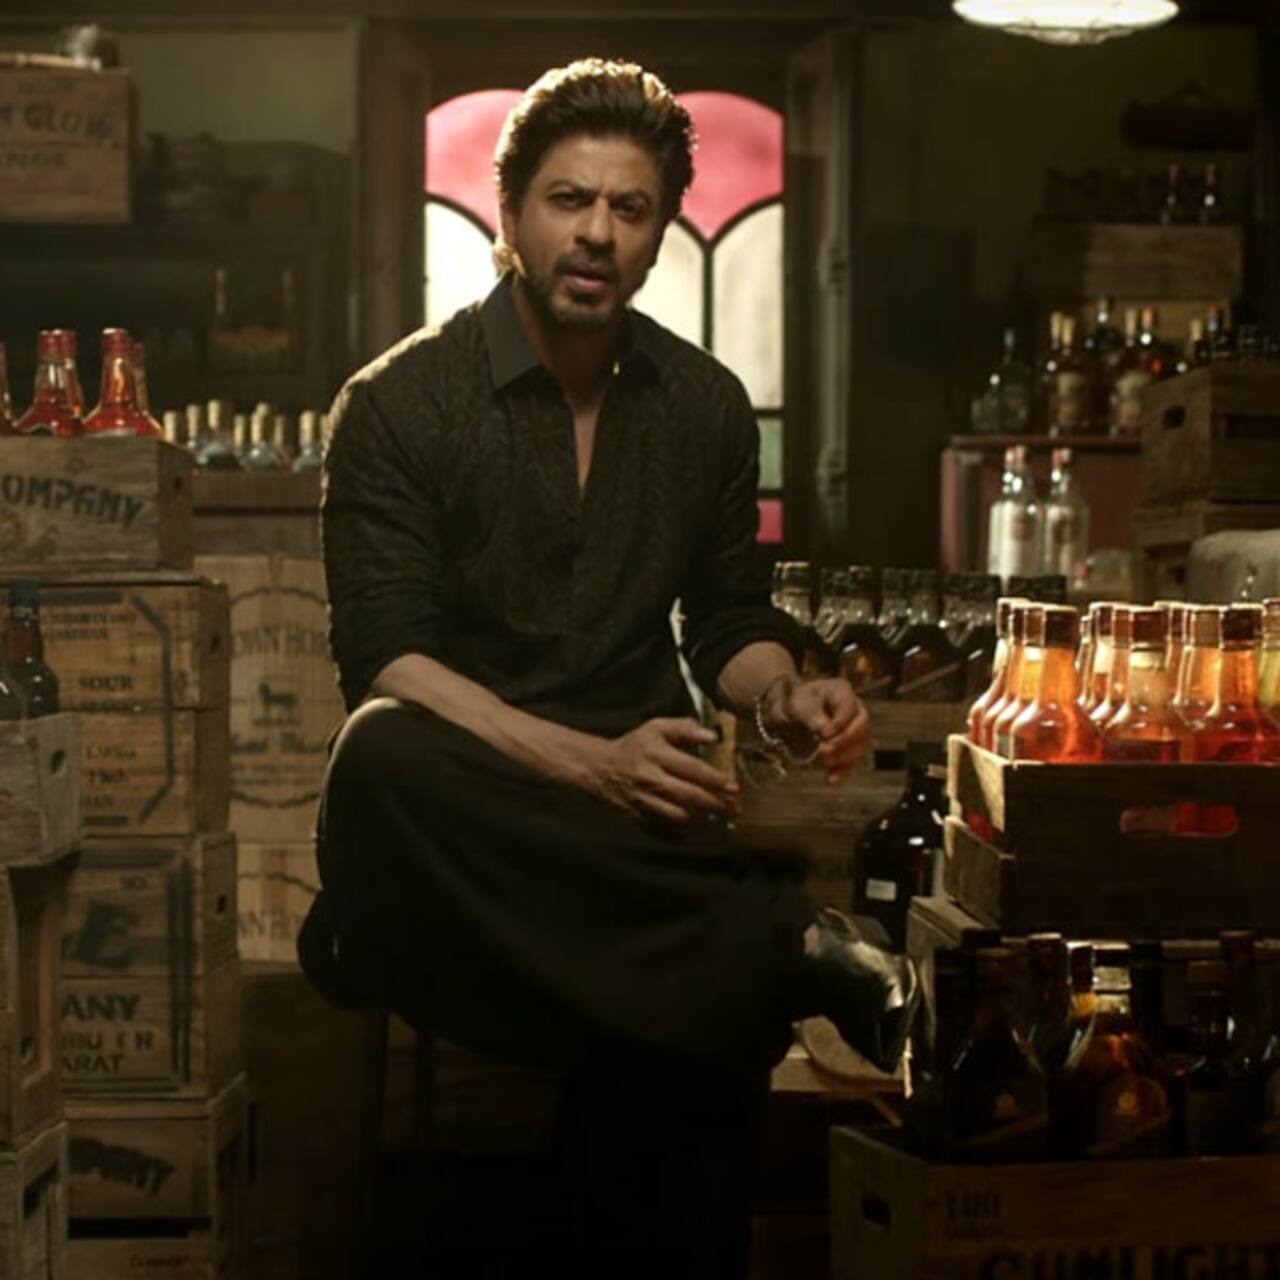 Shah Rukh Khan in the Raees teaser looks Hot AF